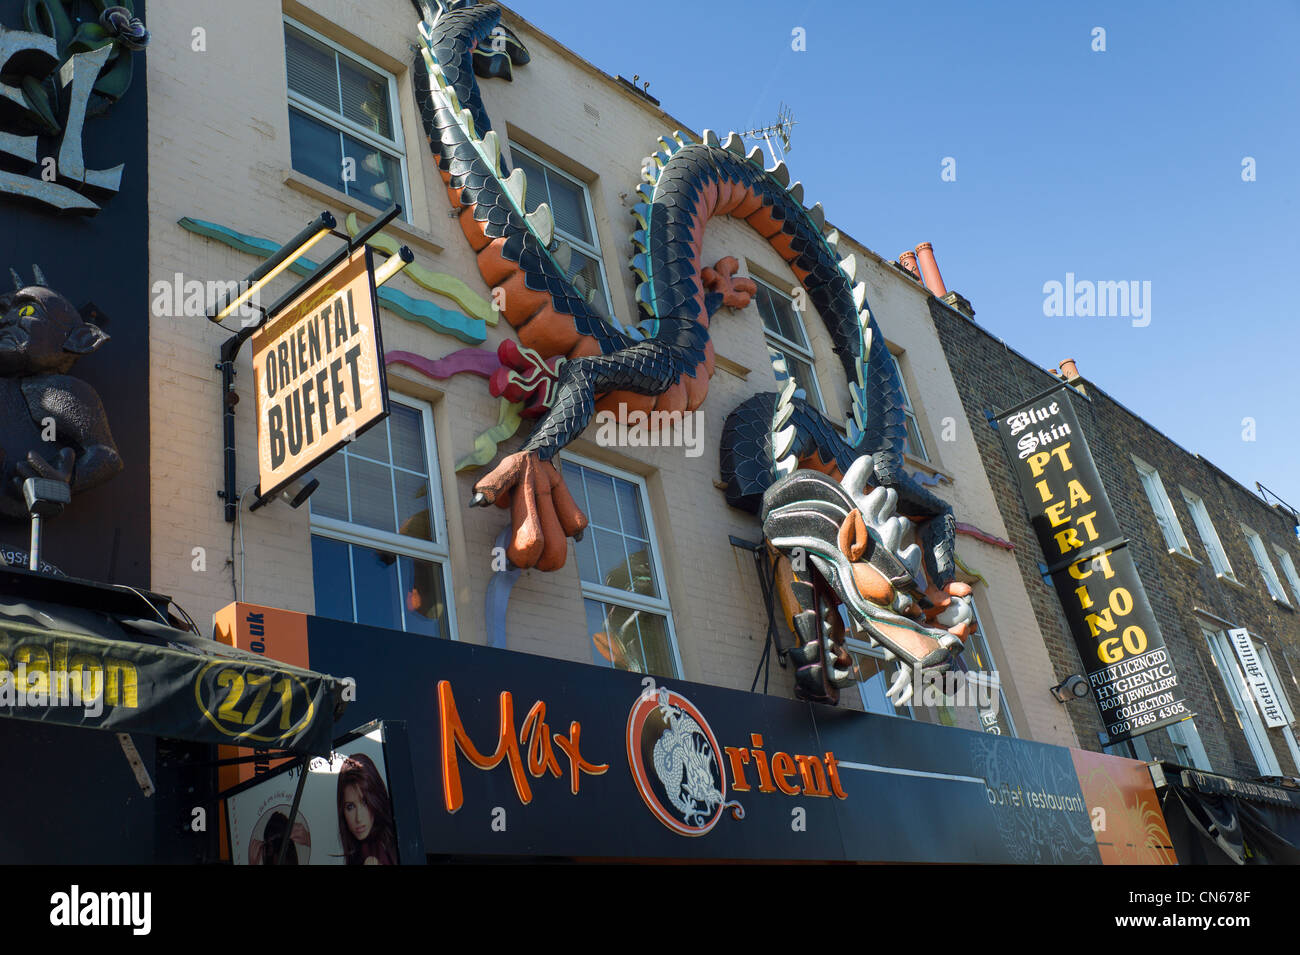 Oriental Buffet, dragon shop front, Camden Market, Camden Town, London England. Stock Photo